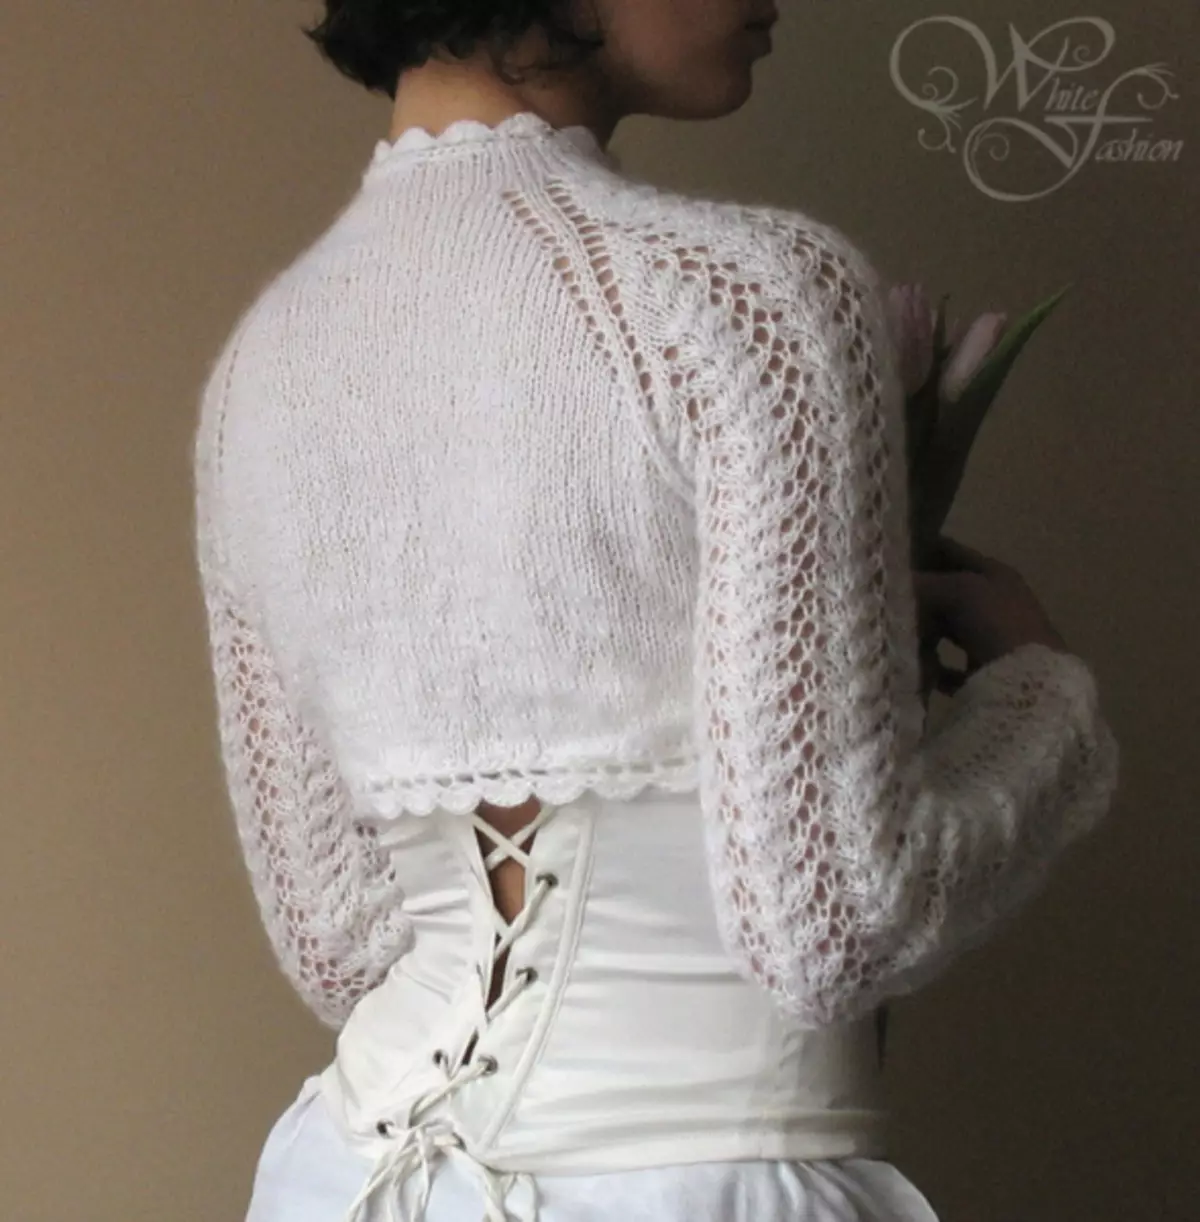 Crochet Caprchet ជាមួយគ្រោងការណ៍និងការពិពណ៌នានៅលើស្មា: ថ្នាក់មេជាមួយរូបថតនិងវីដេអូ